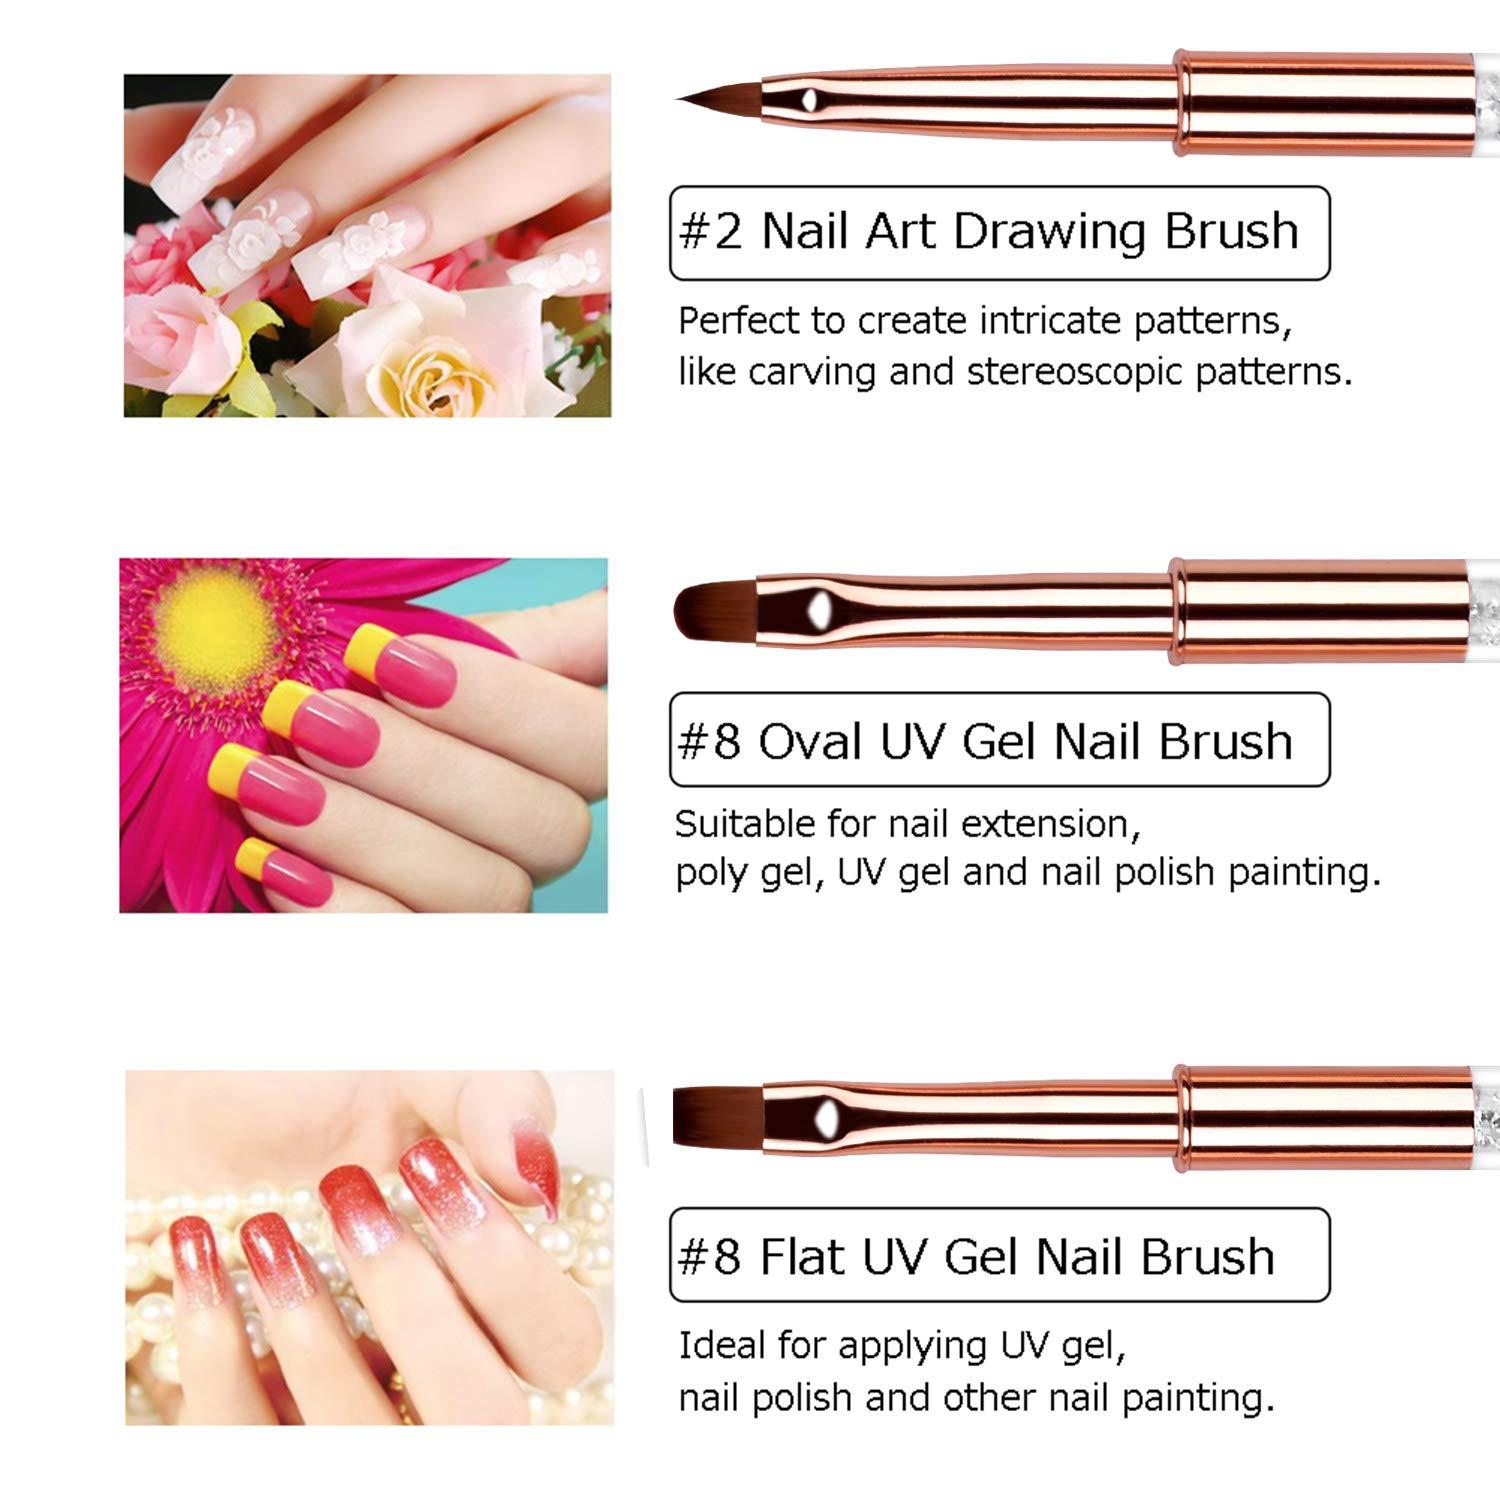 5Pcs/Set Nail Art Painting Brushes Nail Art Decorations Brush For Diy  Manicure Nail Salon Home Diy